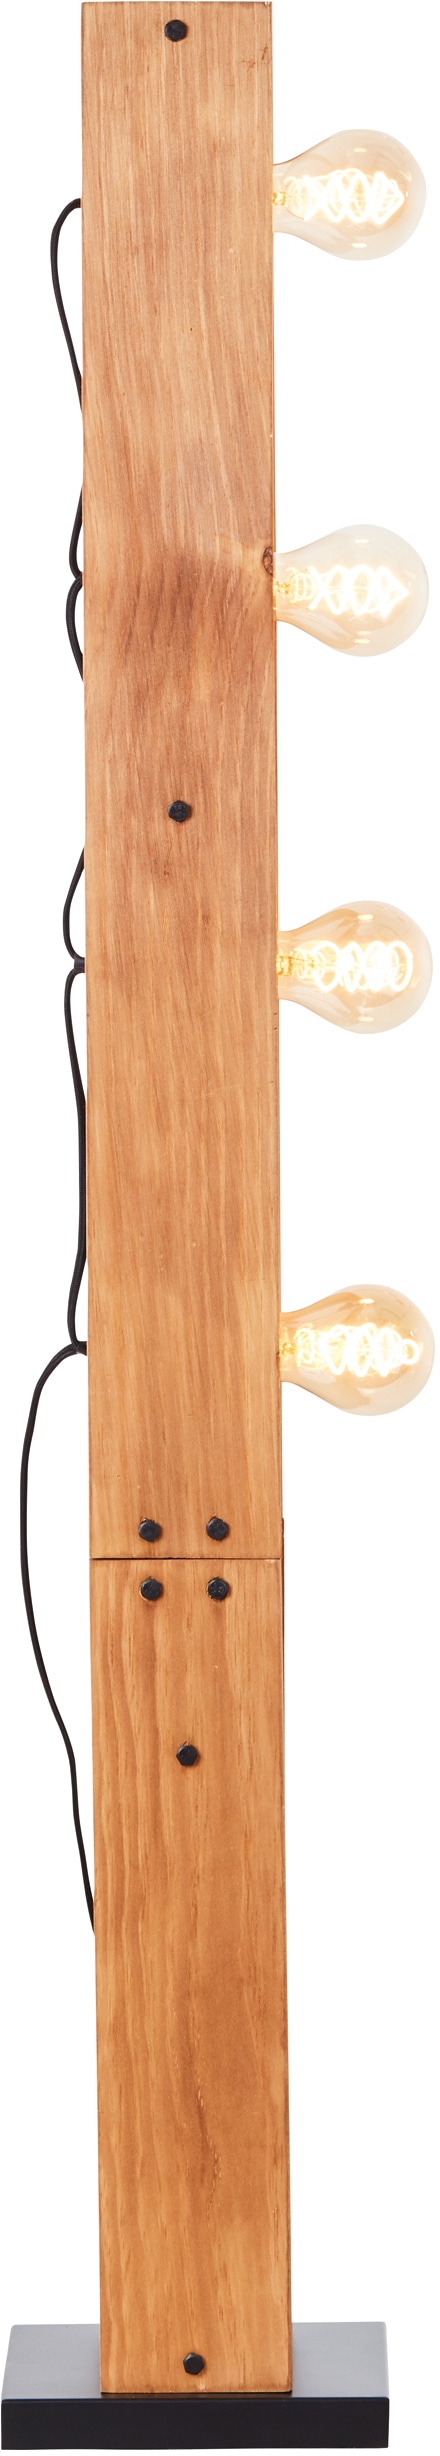 Brilliant Stehlampe »Calandra«, 4 flammig, Leuchtmittel E27 | ohne Leuchtmittel, 125,5 x 20 x 20 cm, 4 x E27, Metall/Holz, schwarz/holz